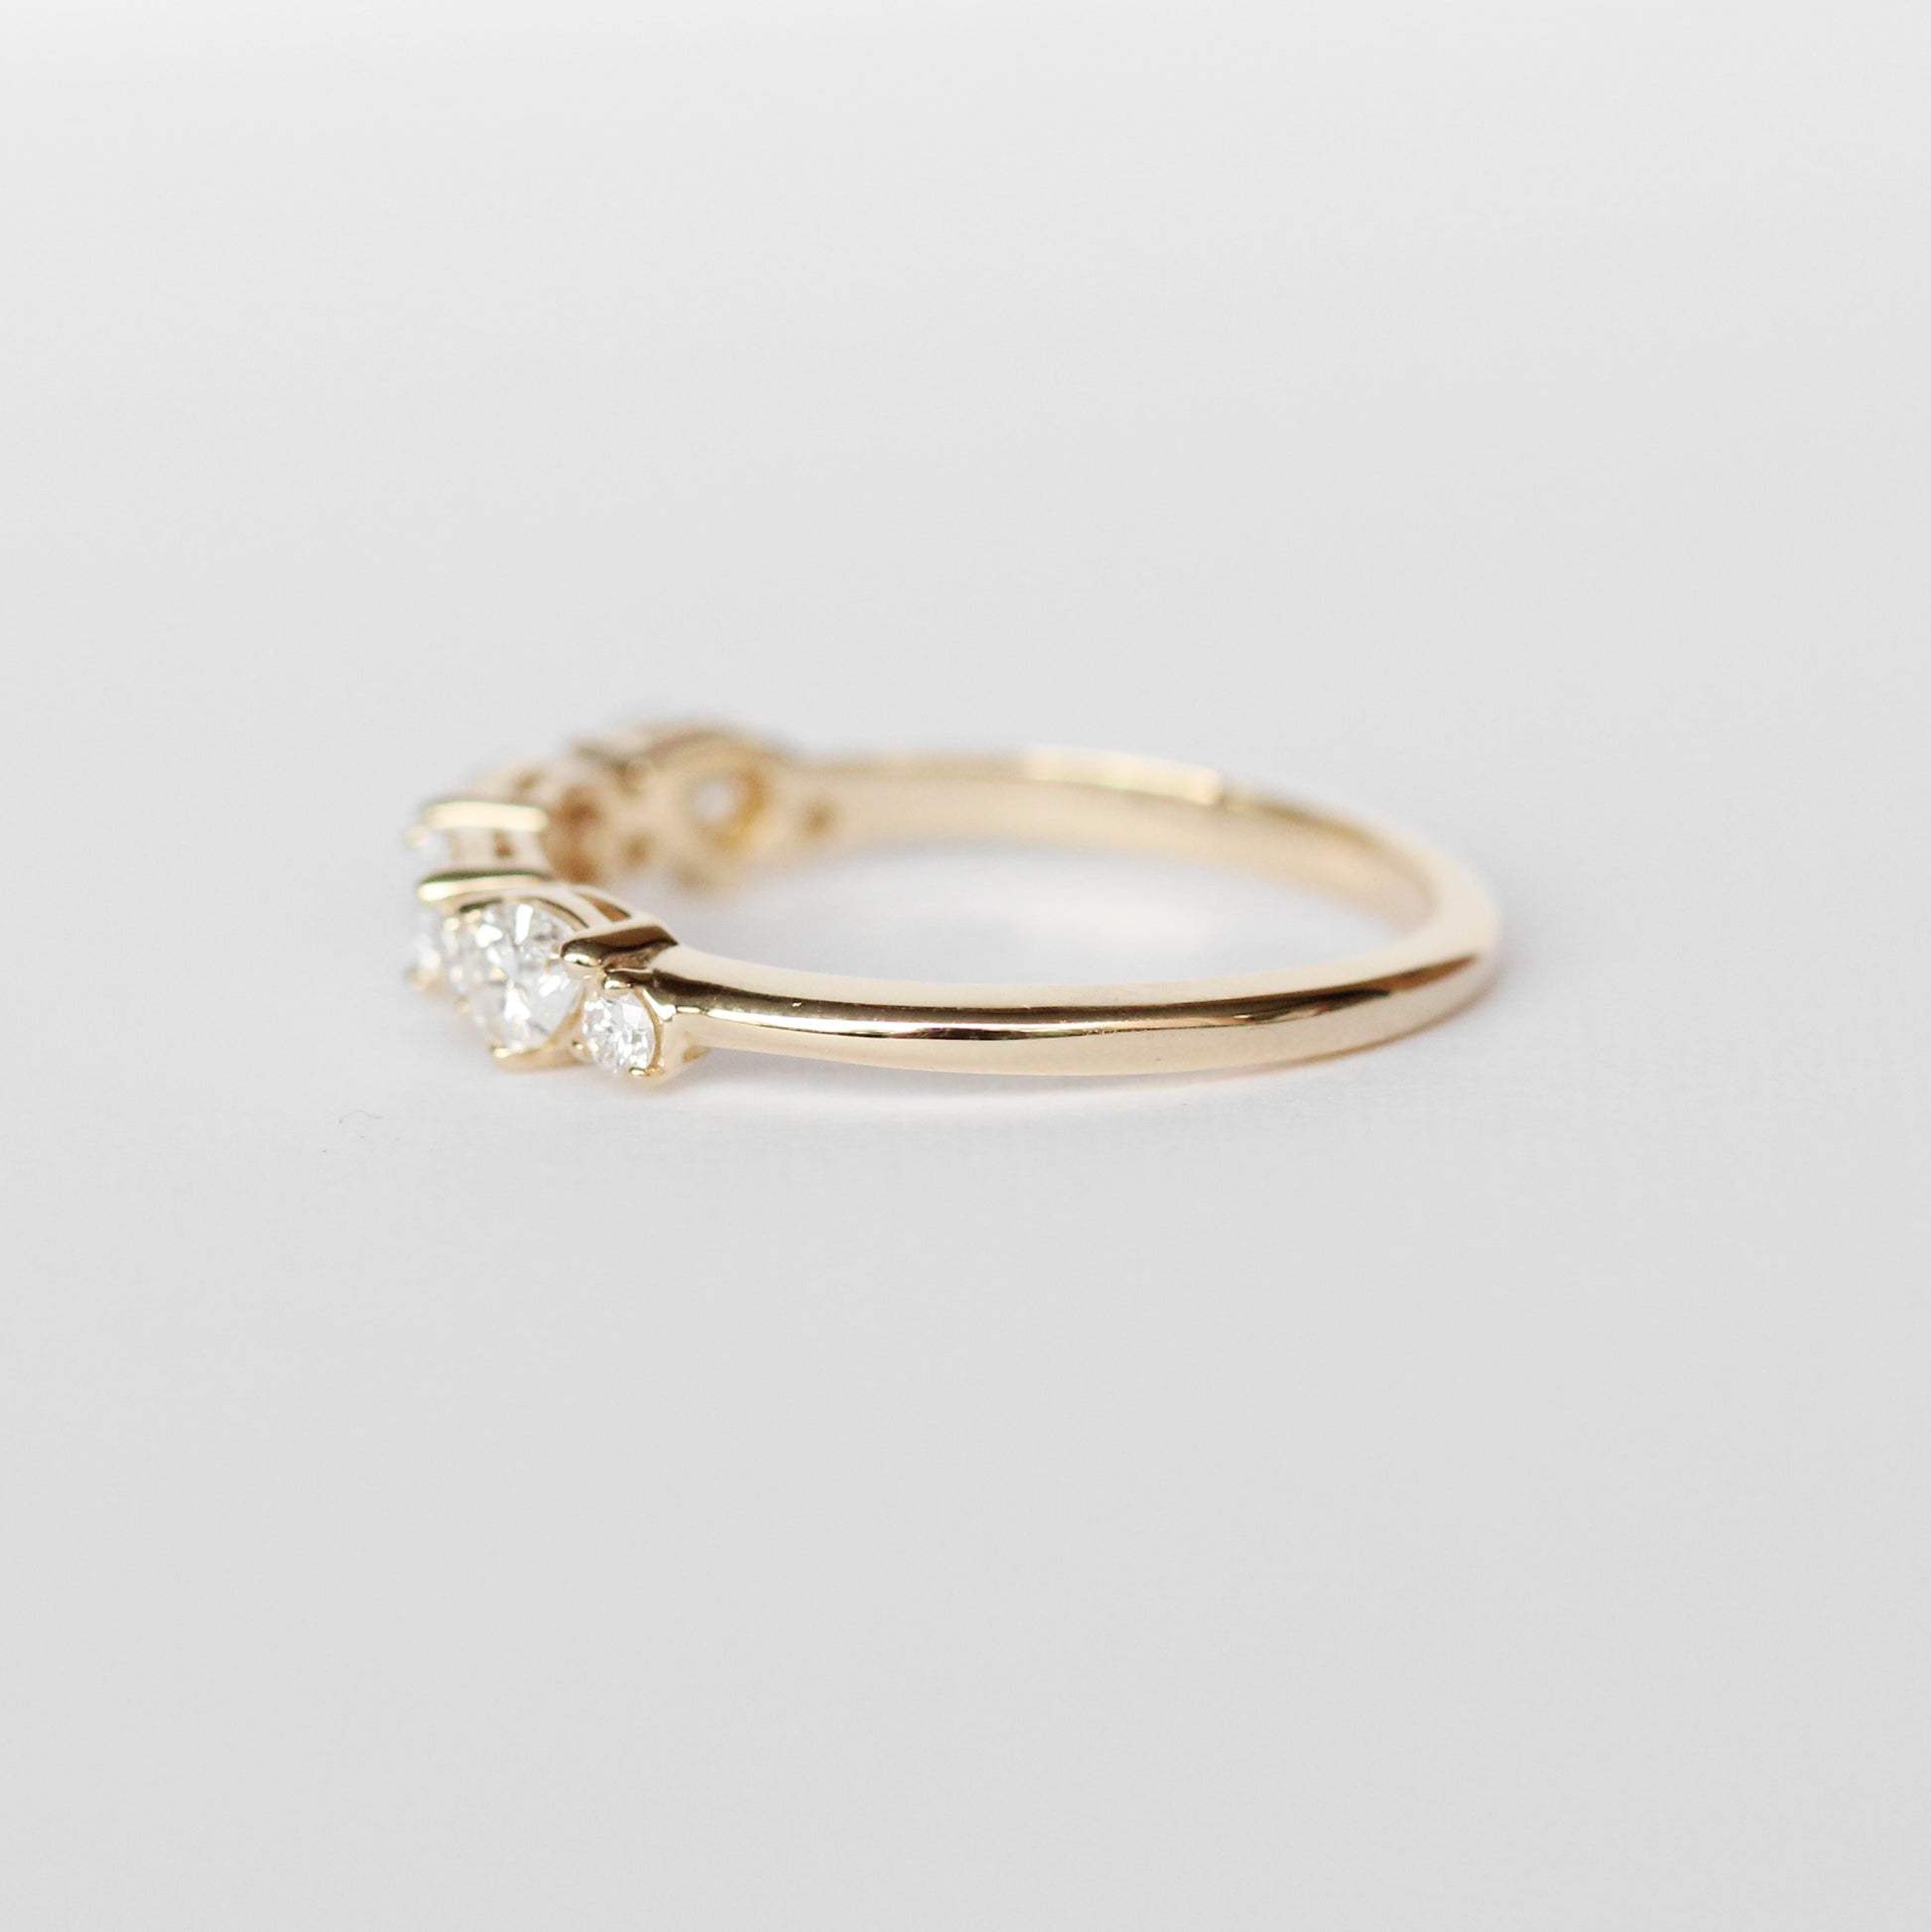 Reya Diamond Engagement Ring Band - White diamonds - Midwinter Co. Alternative Bridal Rings and Modern Fine Jewelry